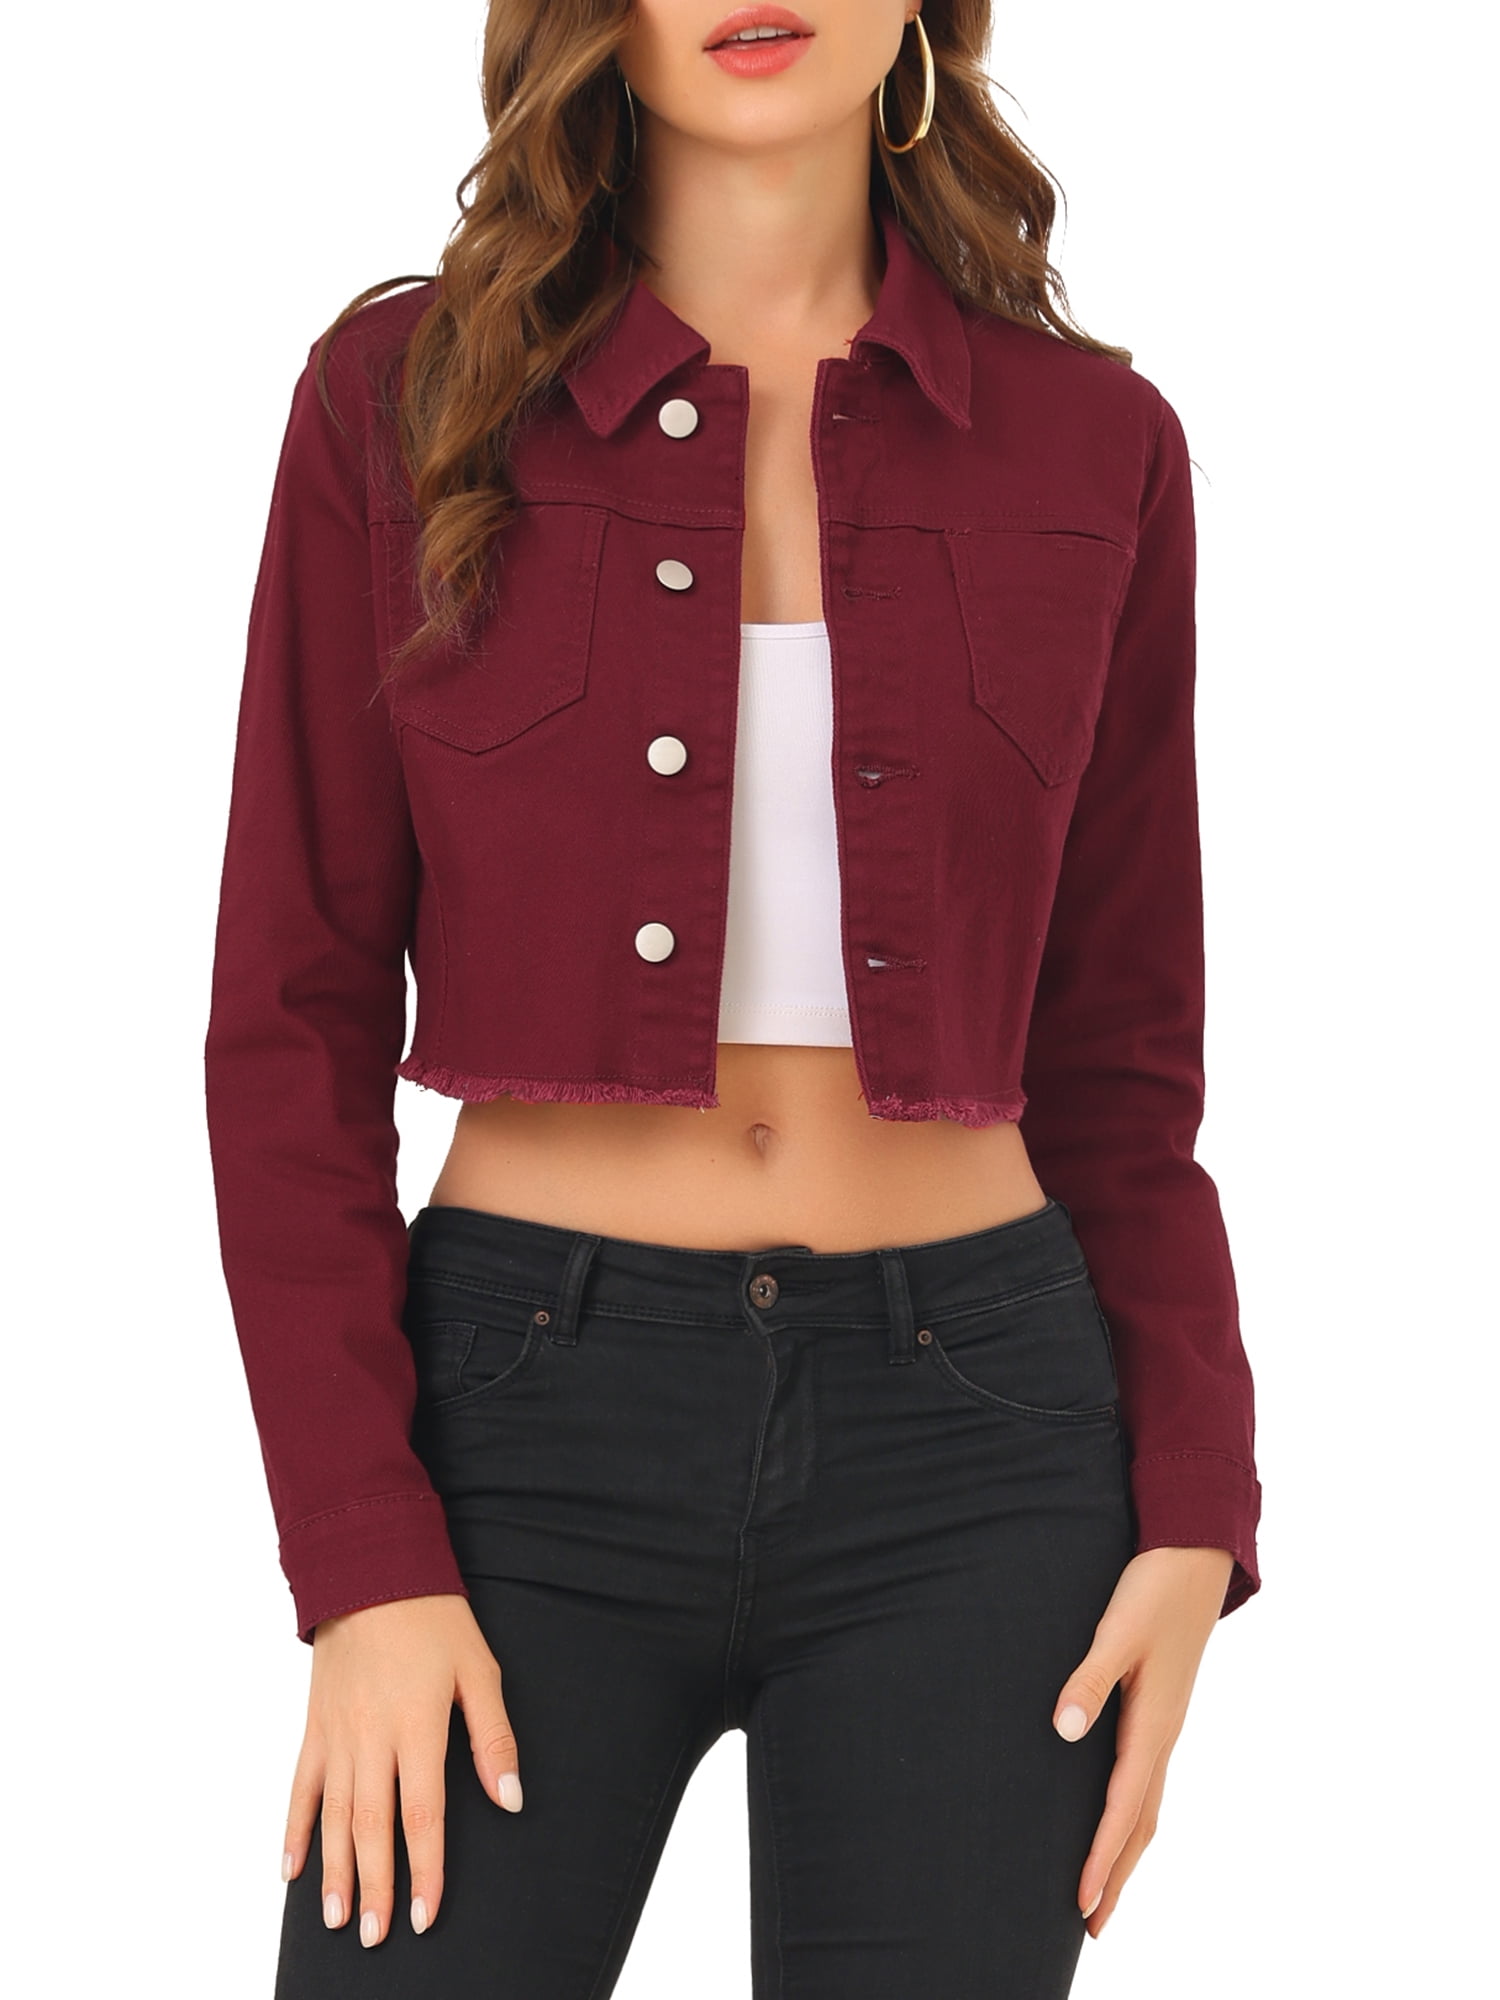 NWOT Diane Gilman jacket | Denim jacket fashion, Burgundy jean jacket, Maroon  jacket